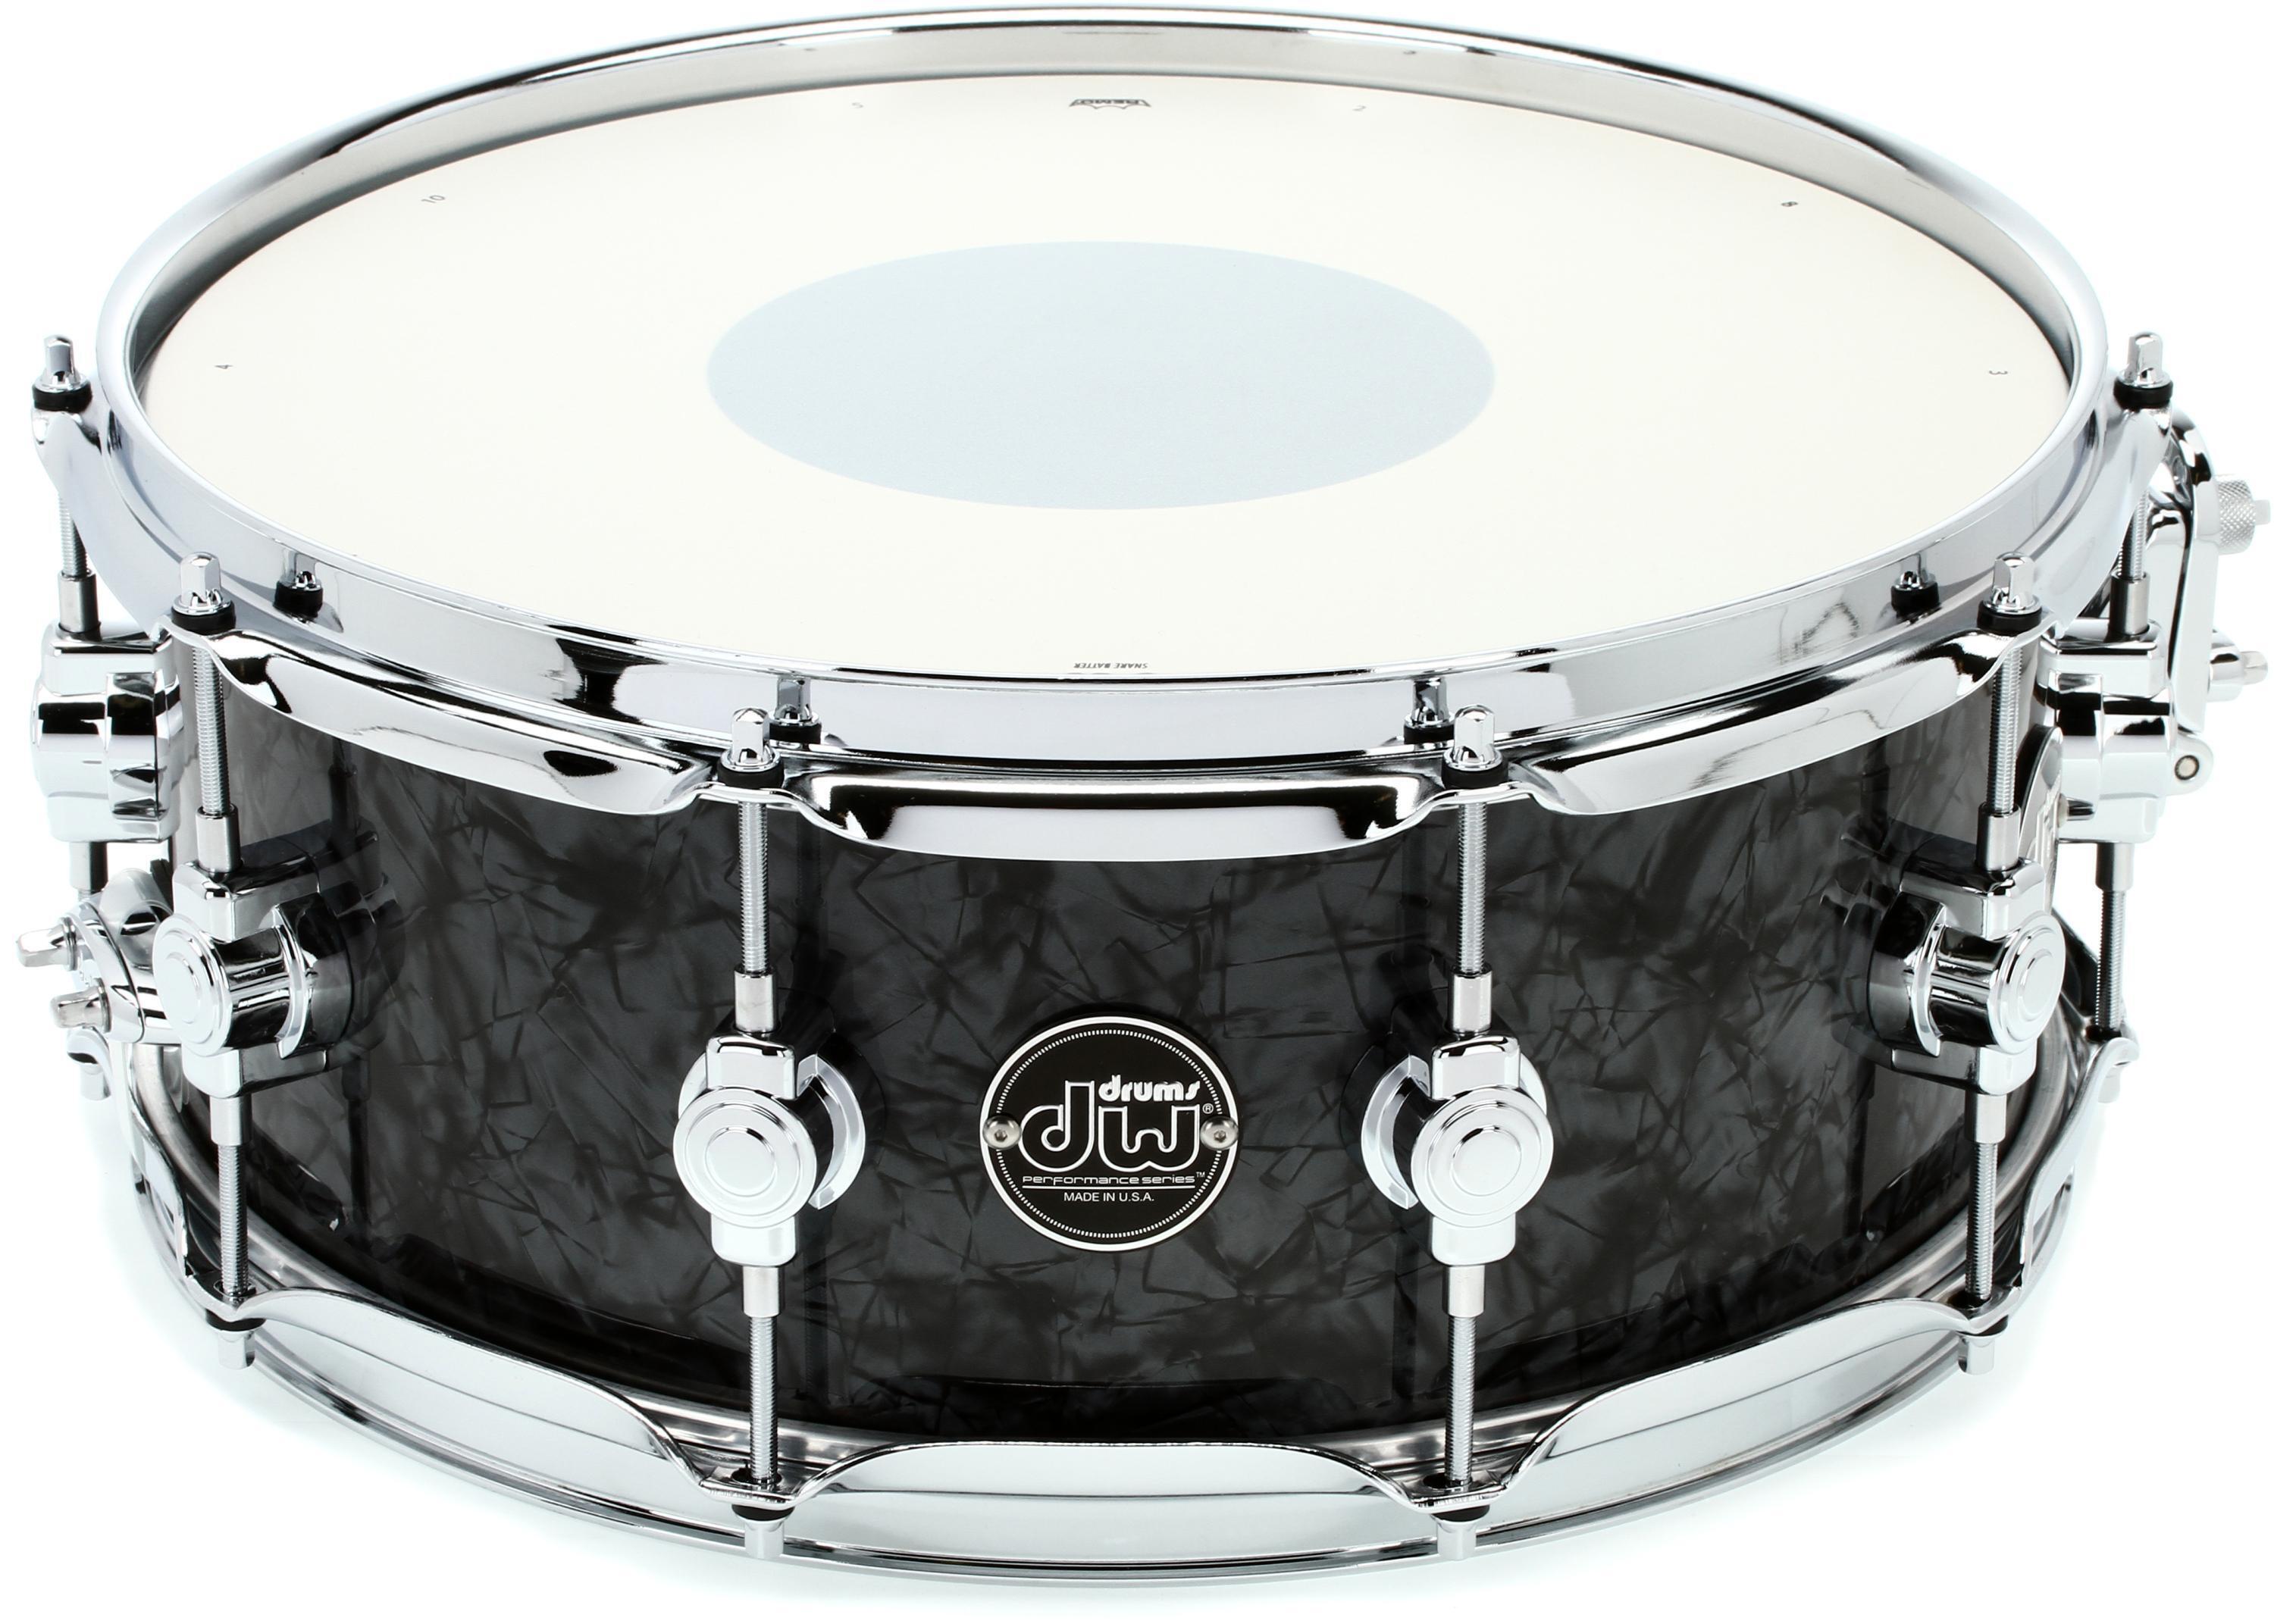 DW Performance Series Snare Drum - 5.5 x 14 inch - Black Diamond